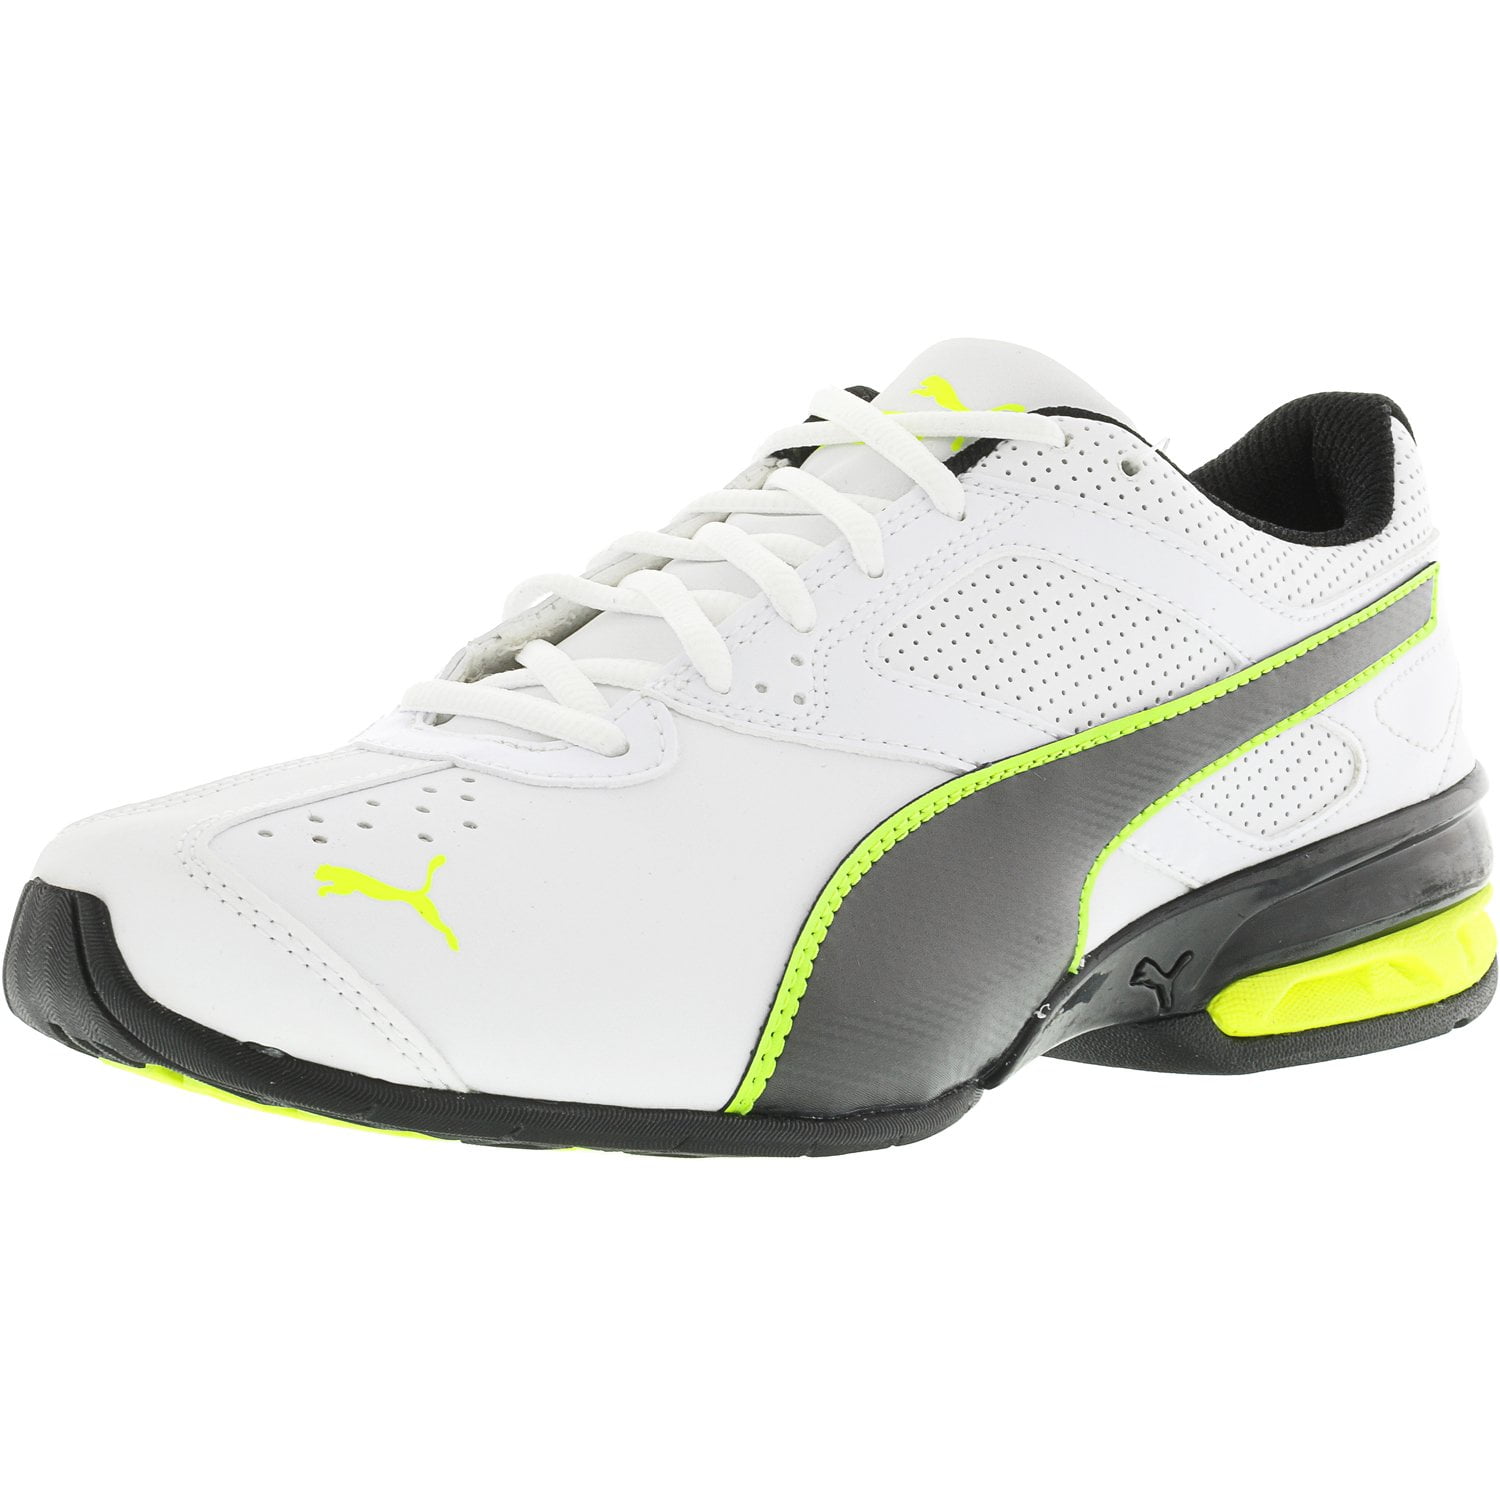 Puma Men's Tazon 6 Fm White / Black Safety Yellow Ankle-High Leather ...